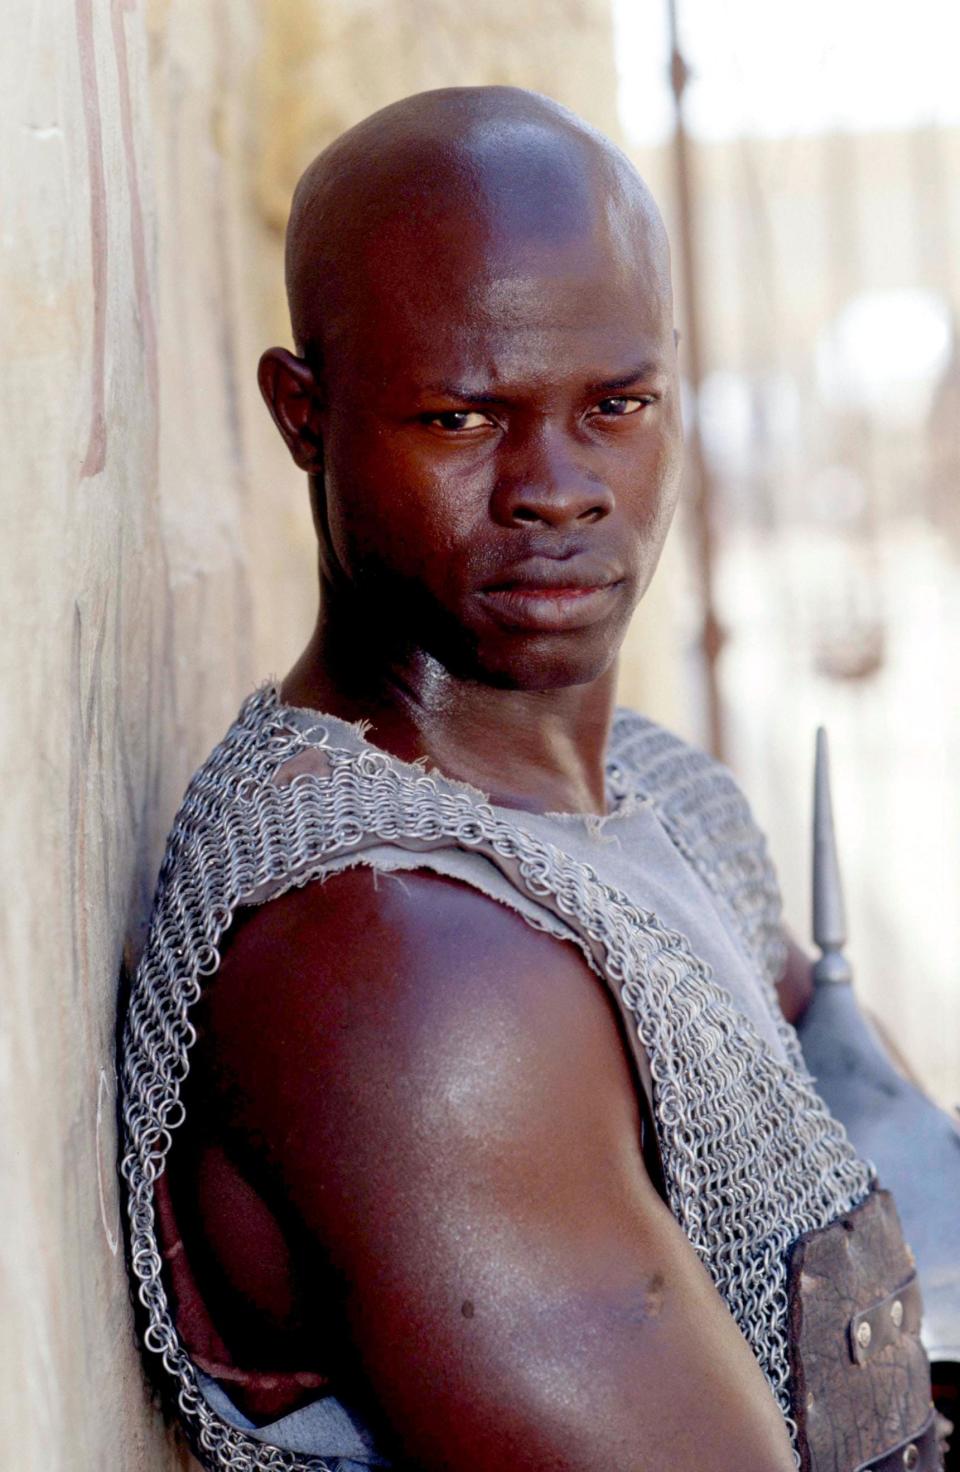 Djimon Hounsou in "Gladiator" 2000.